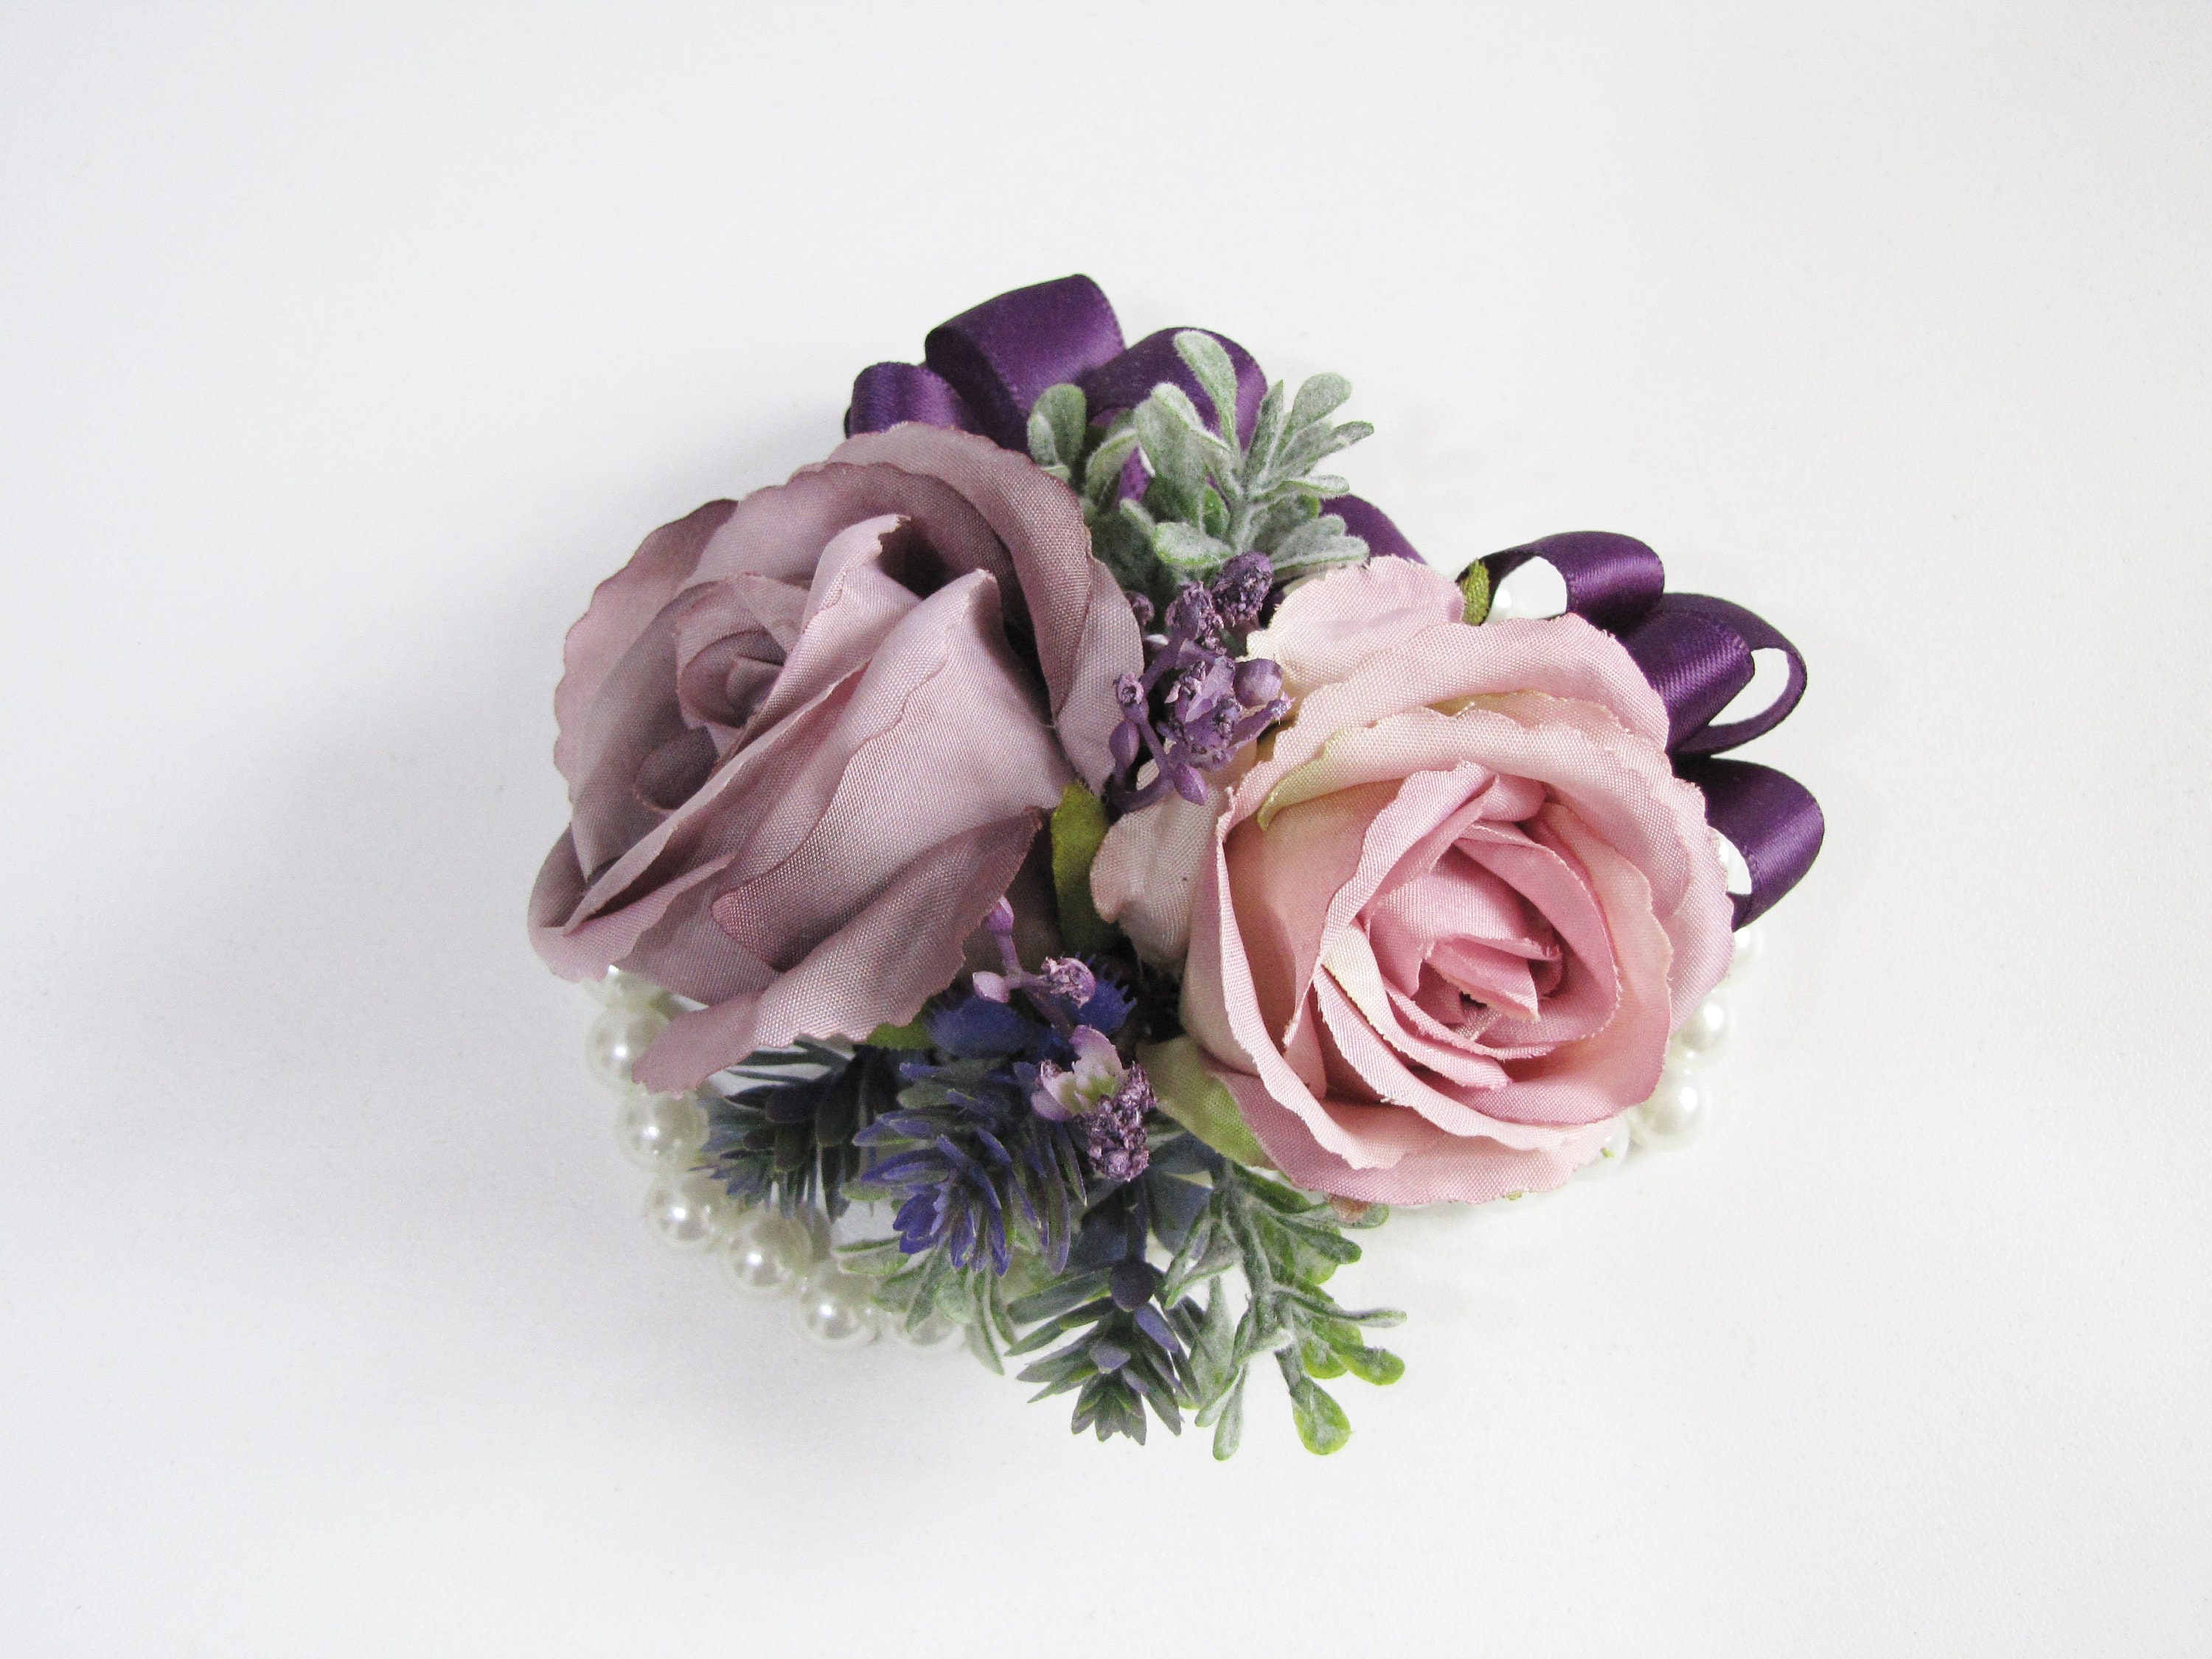 blush pink rose wedding corsage artificial flower corsage Wedding corsage pearl wrist corsage bridesmaid corsage